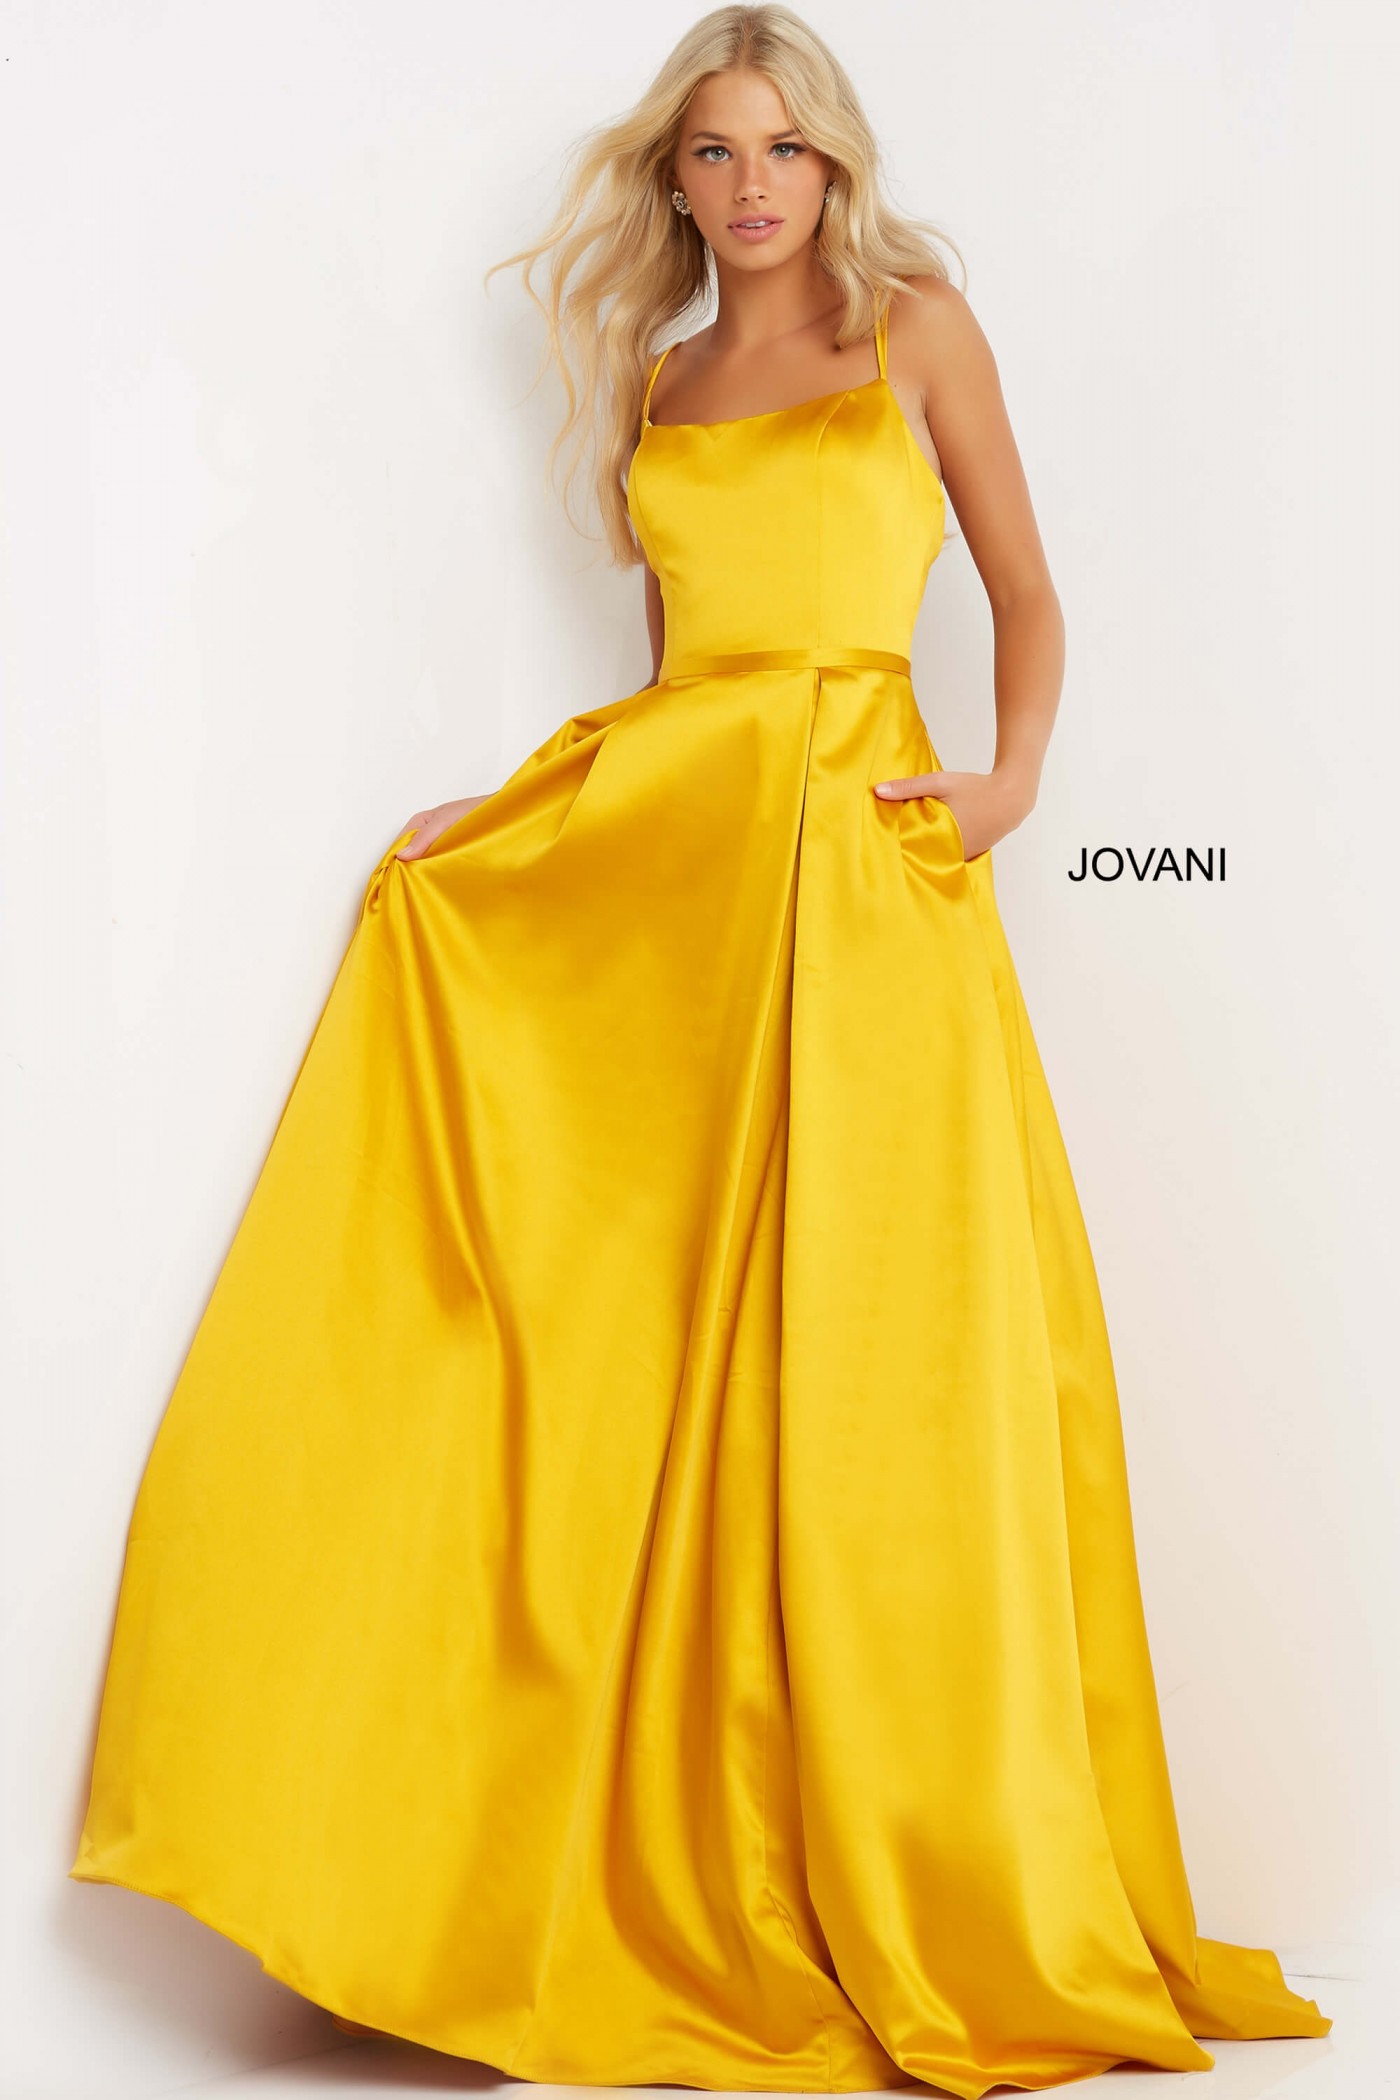 Jovani 02536 Satin A Line Prom Dress